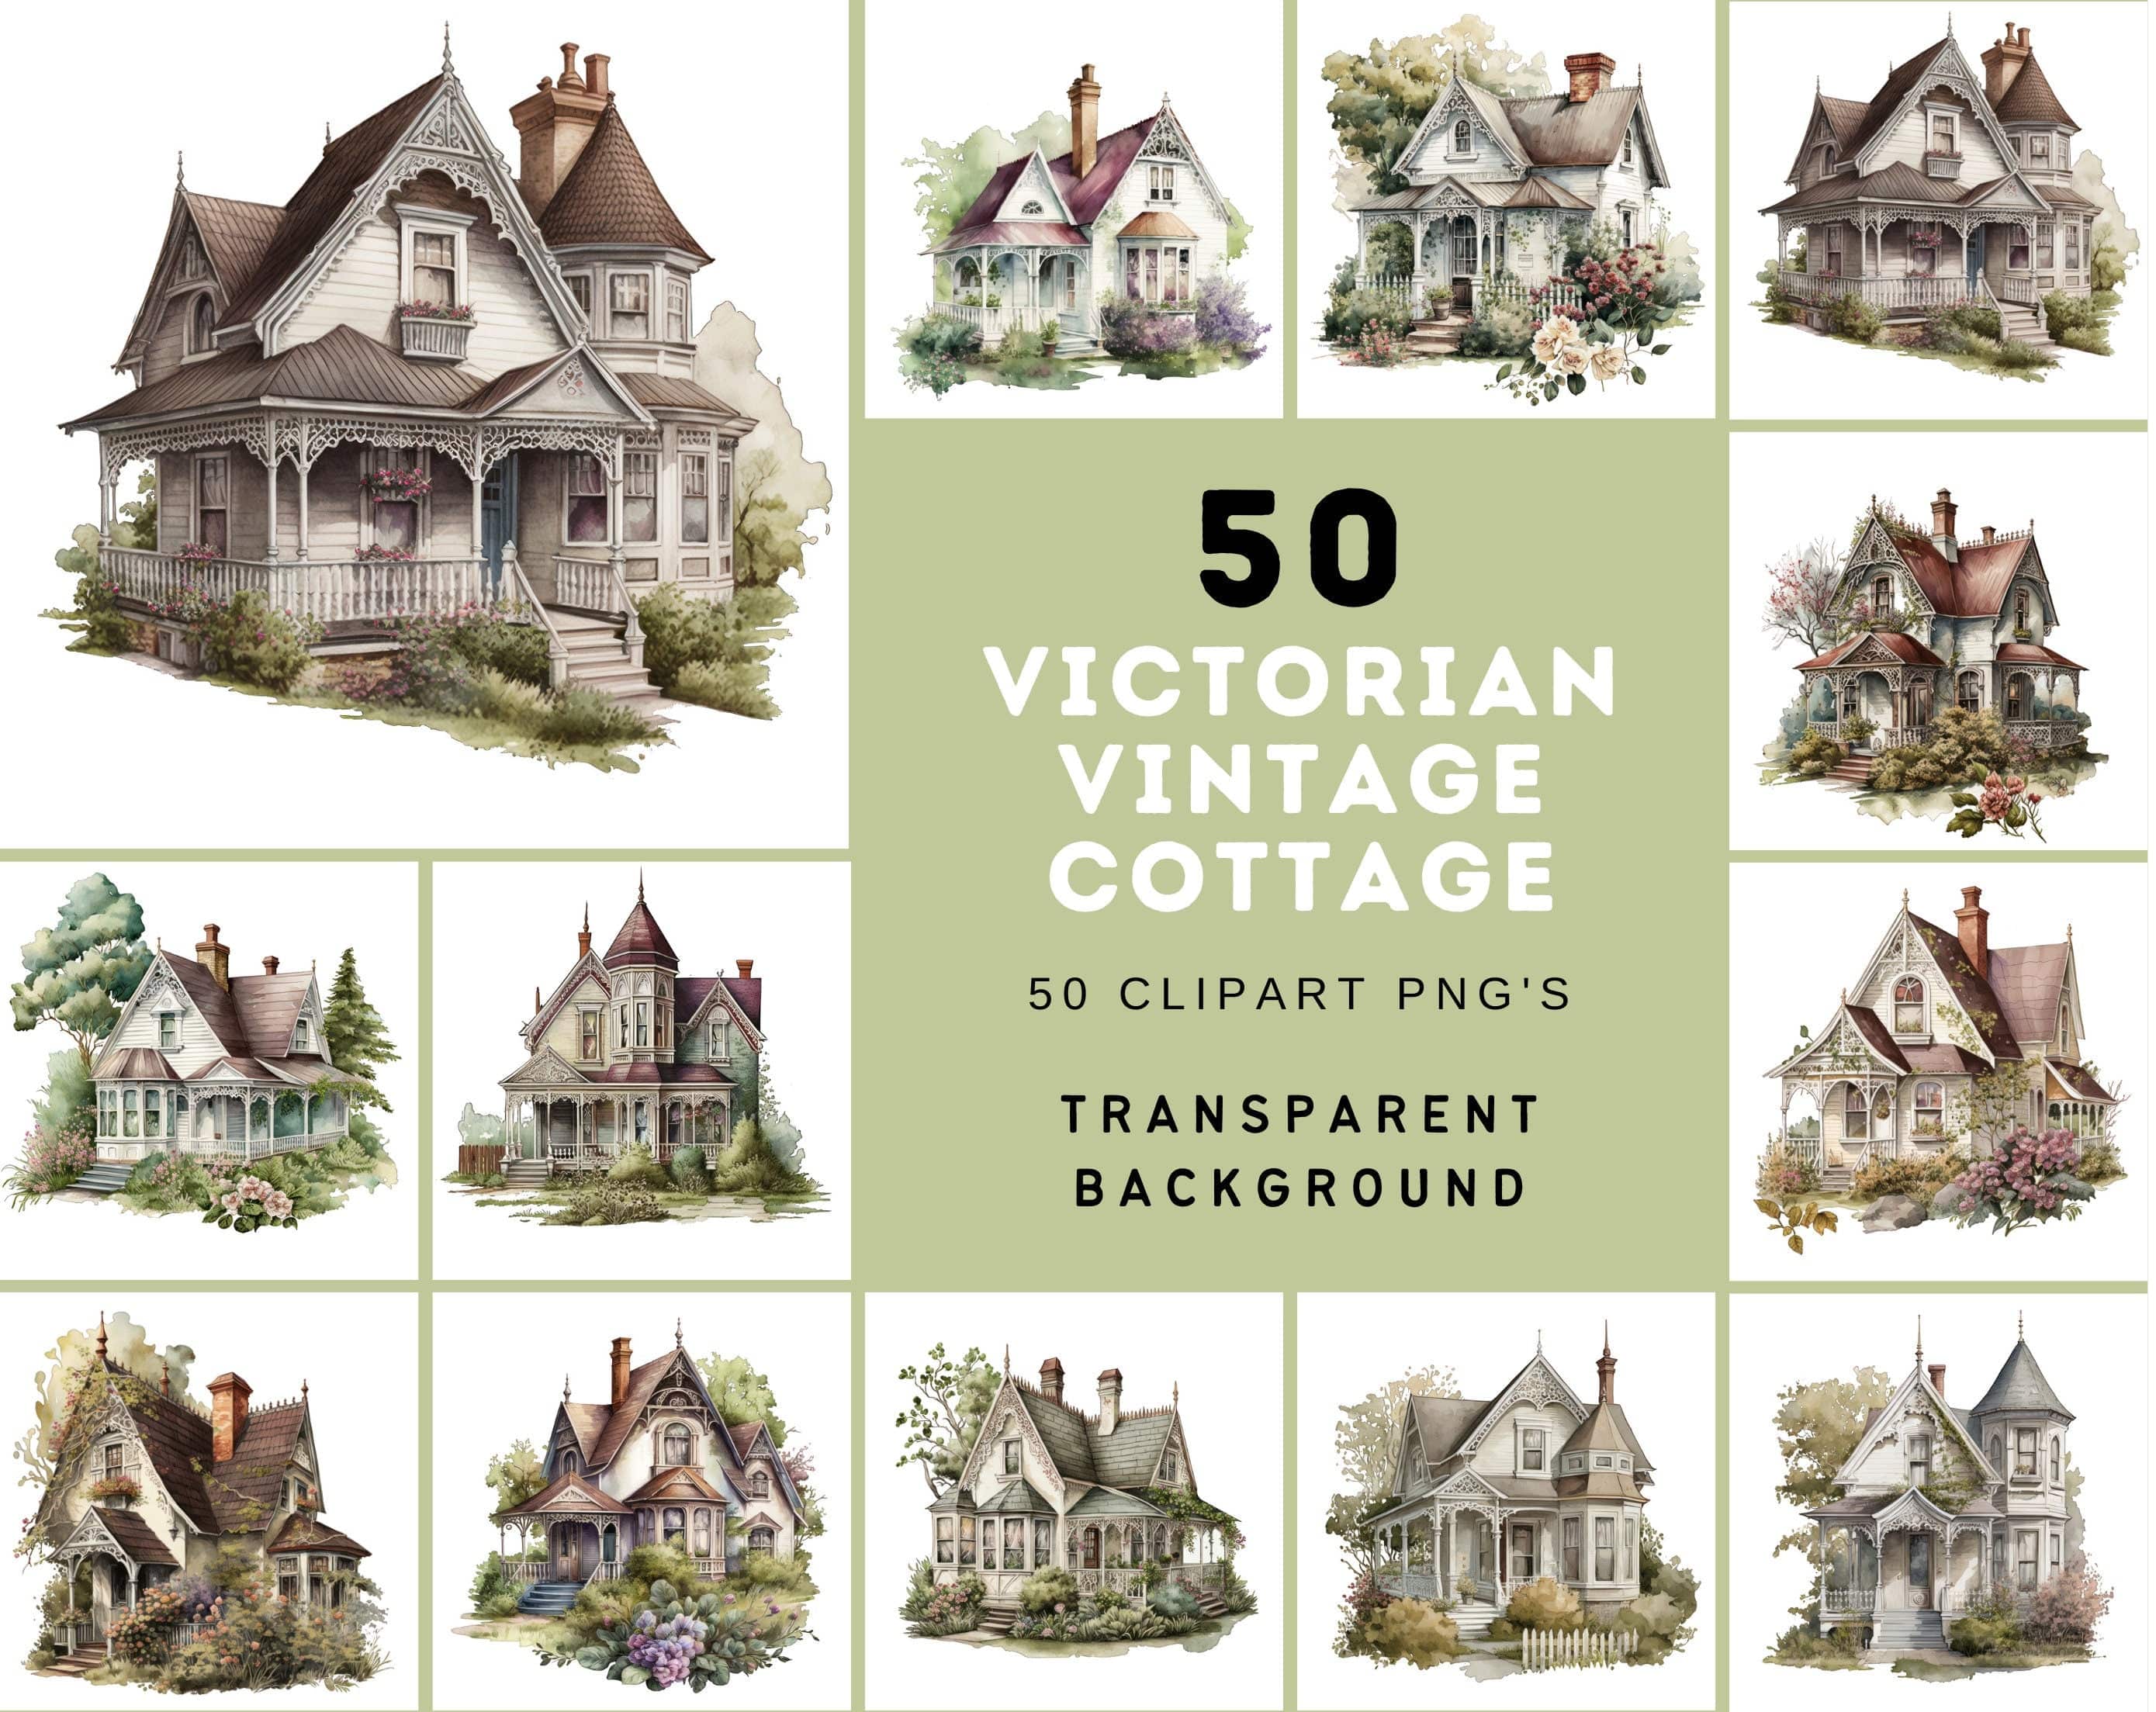 Vintage Victorian Cottage House Illustrations - 50 Transparent PNG Images for DIY Crafting and Home Decor, Commercial use, Graphic Bundle Digital Download Sumobundle